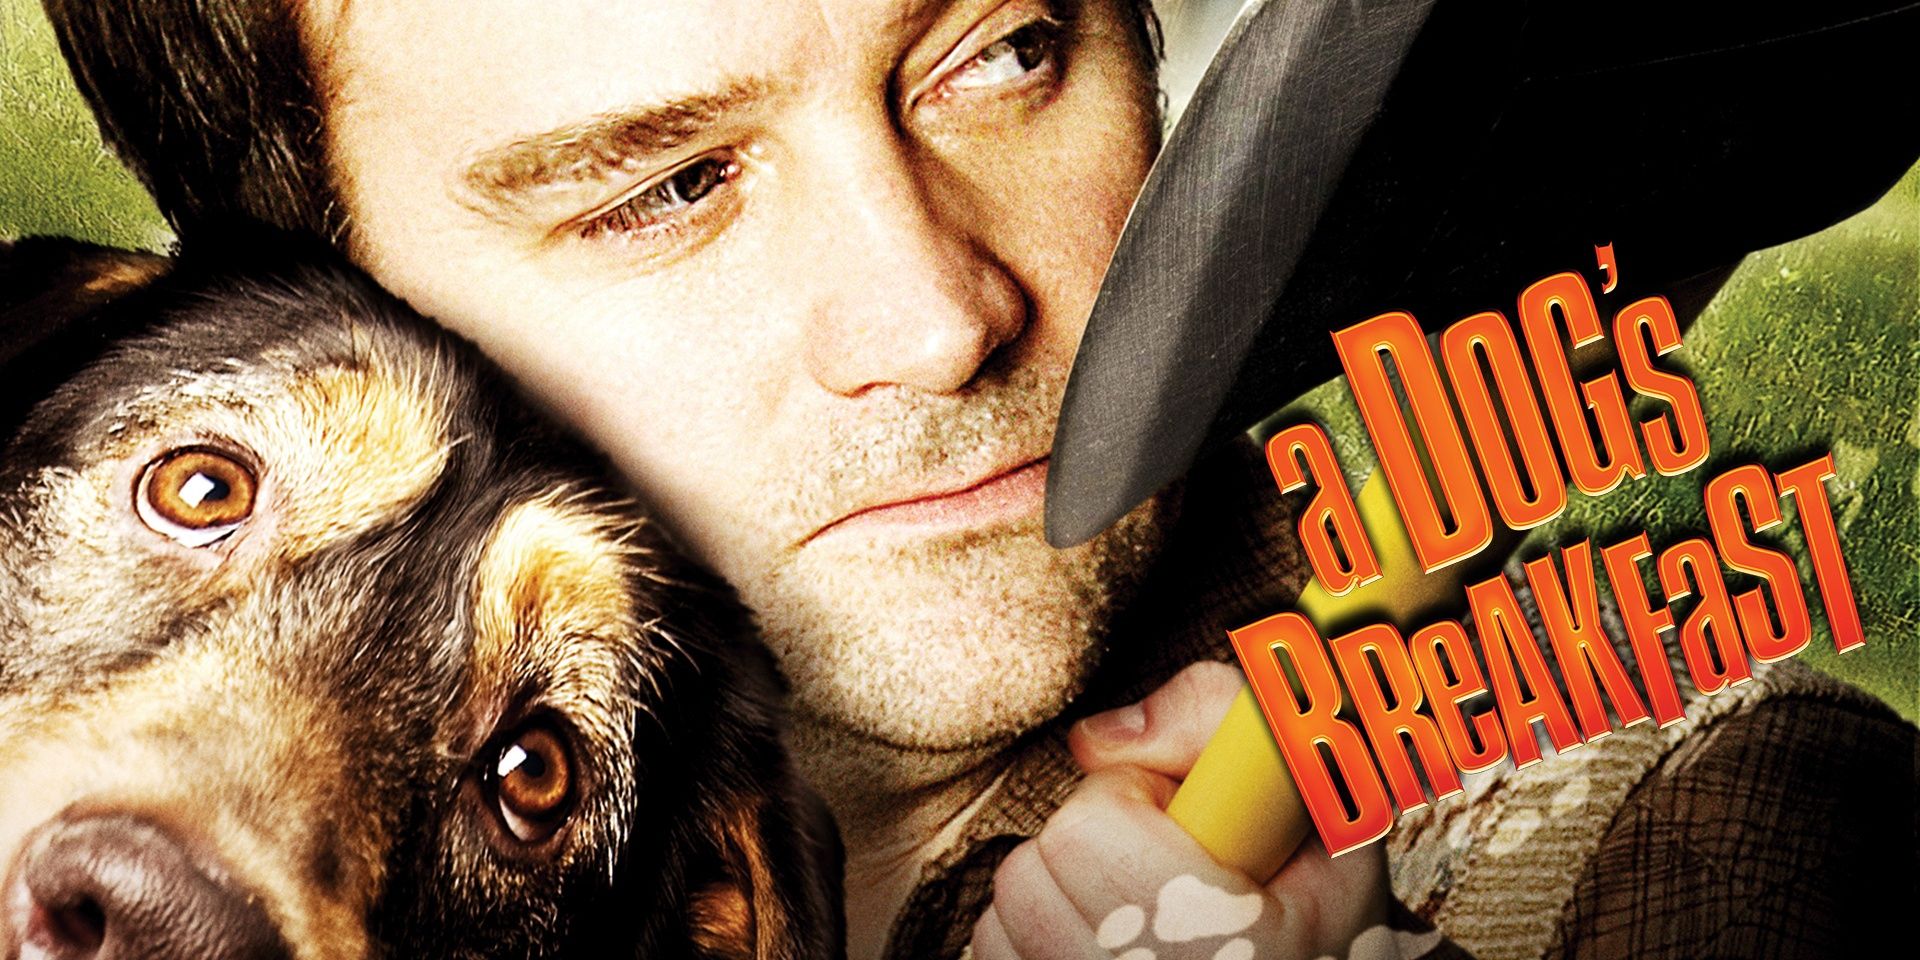 Poster A Dogs Breakfast dibintangi oleh David Hewlett